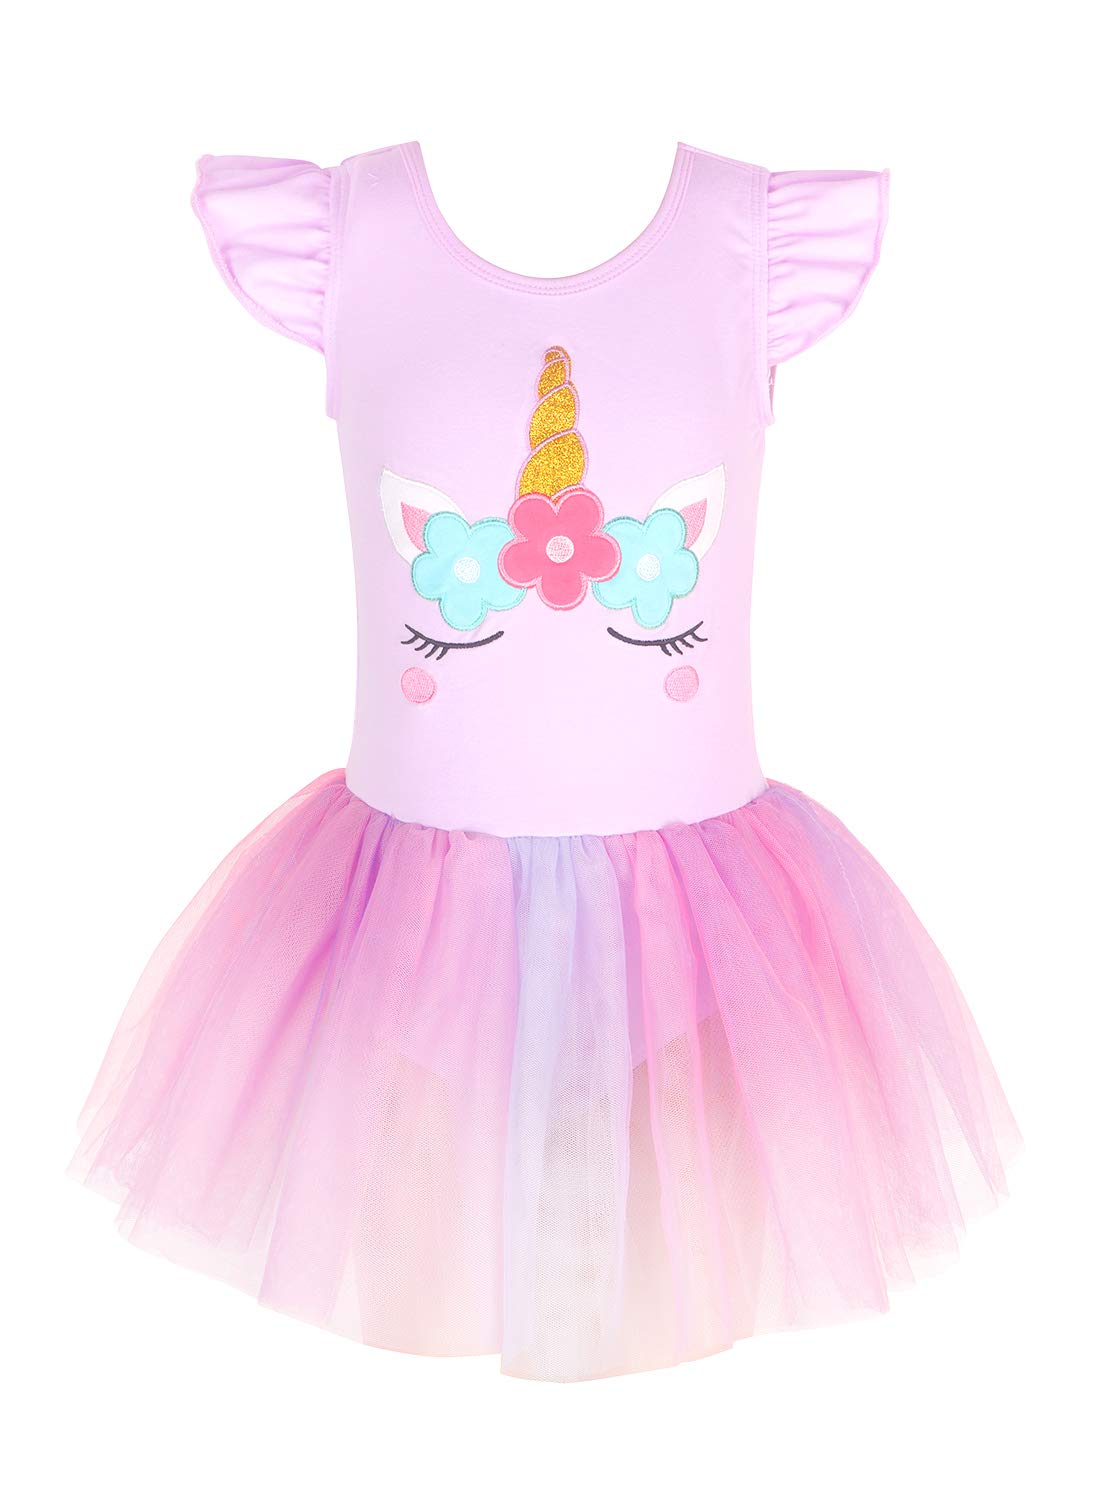 EQSJIU Unicorn Dance Leotards for girls 4t 5t Purple Tutu colorful Rainbow Skirts Paster Adorable Halloween costume 4-5t cute Ballet Dr